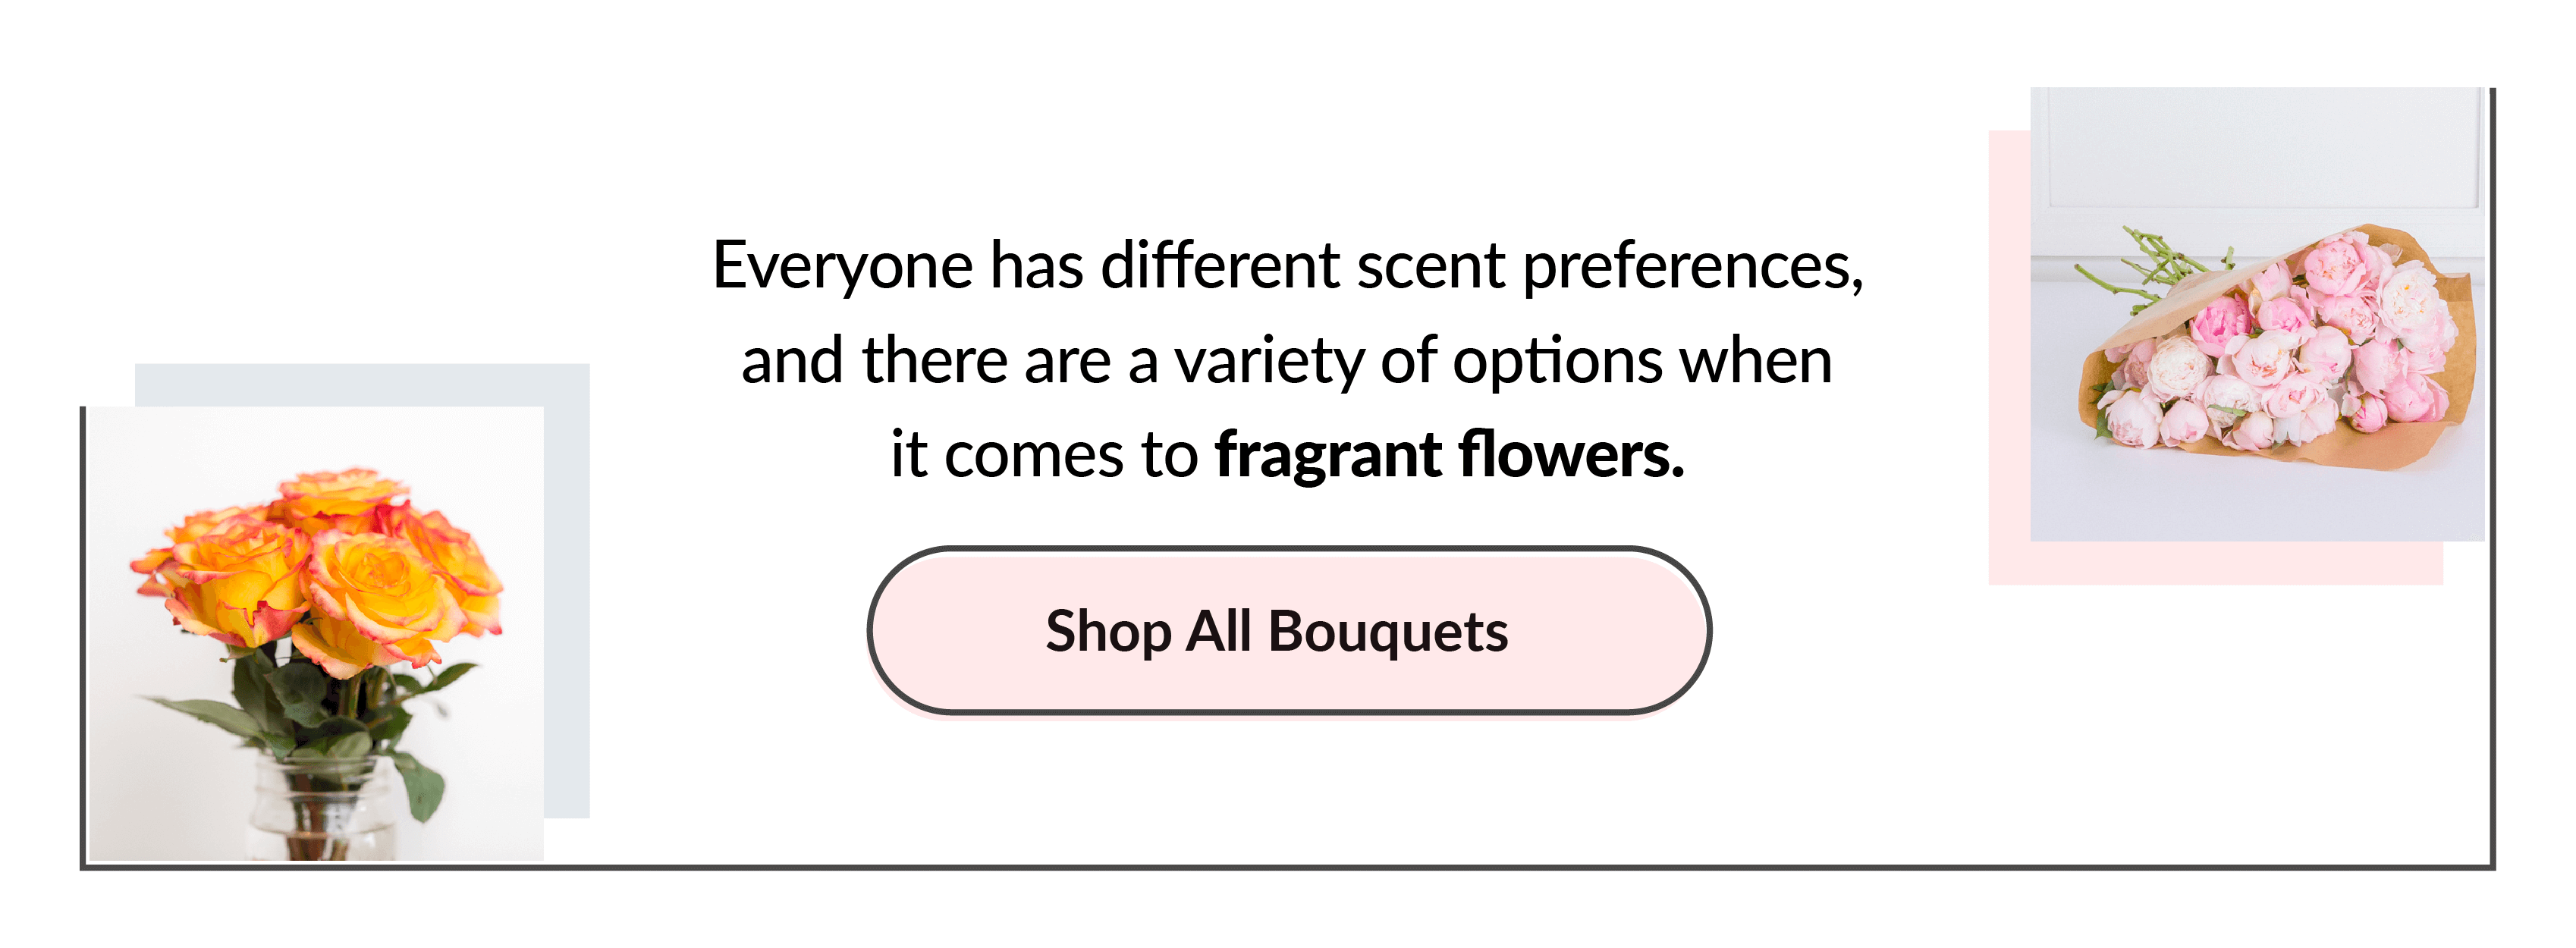 Flower Scent Preferences